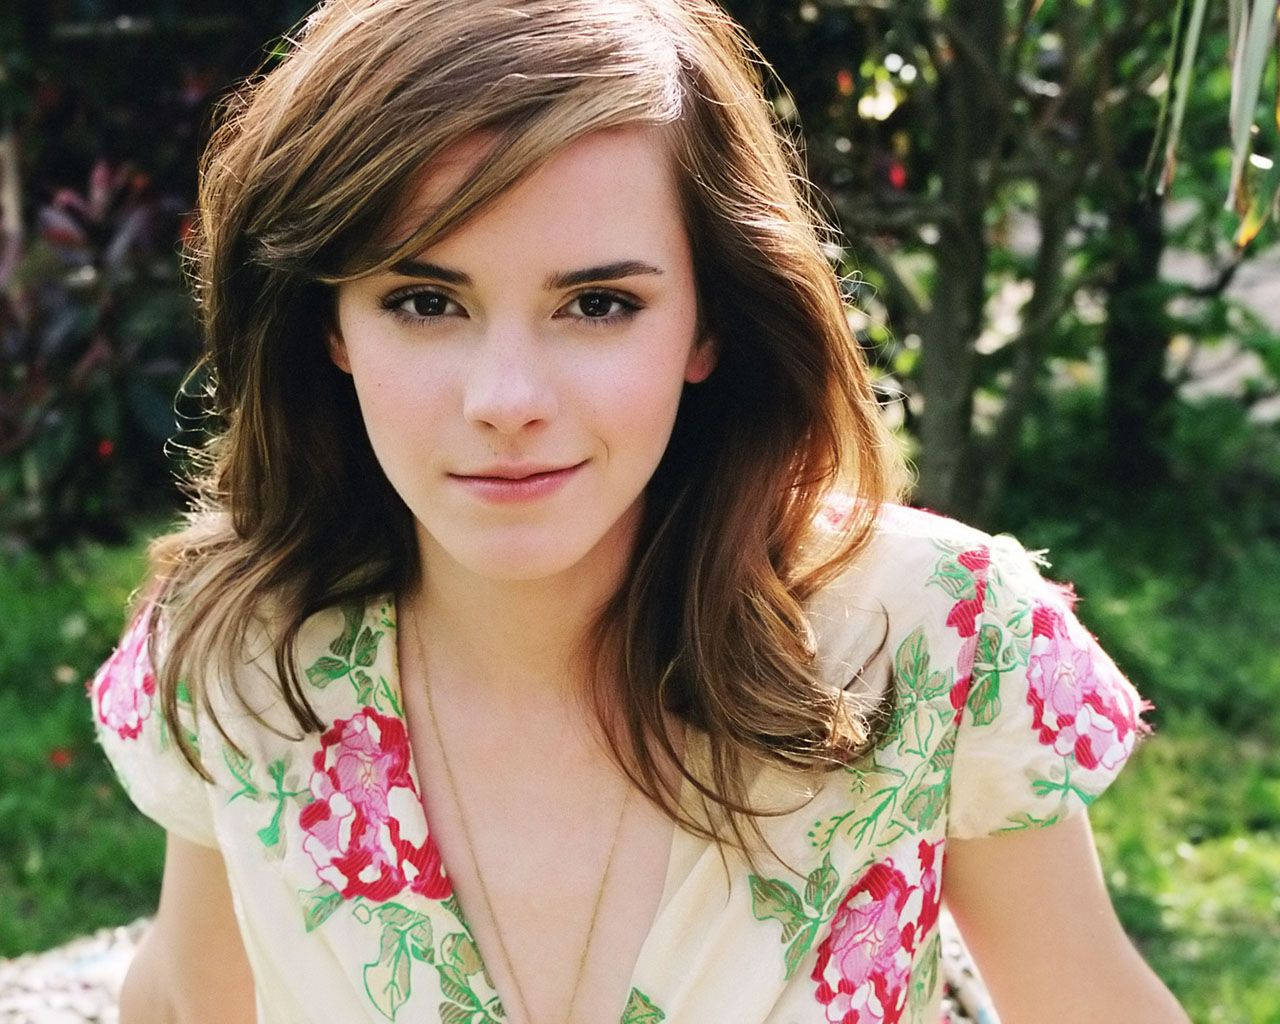 Floral Dress Emma Watson